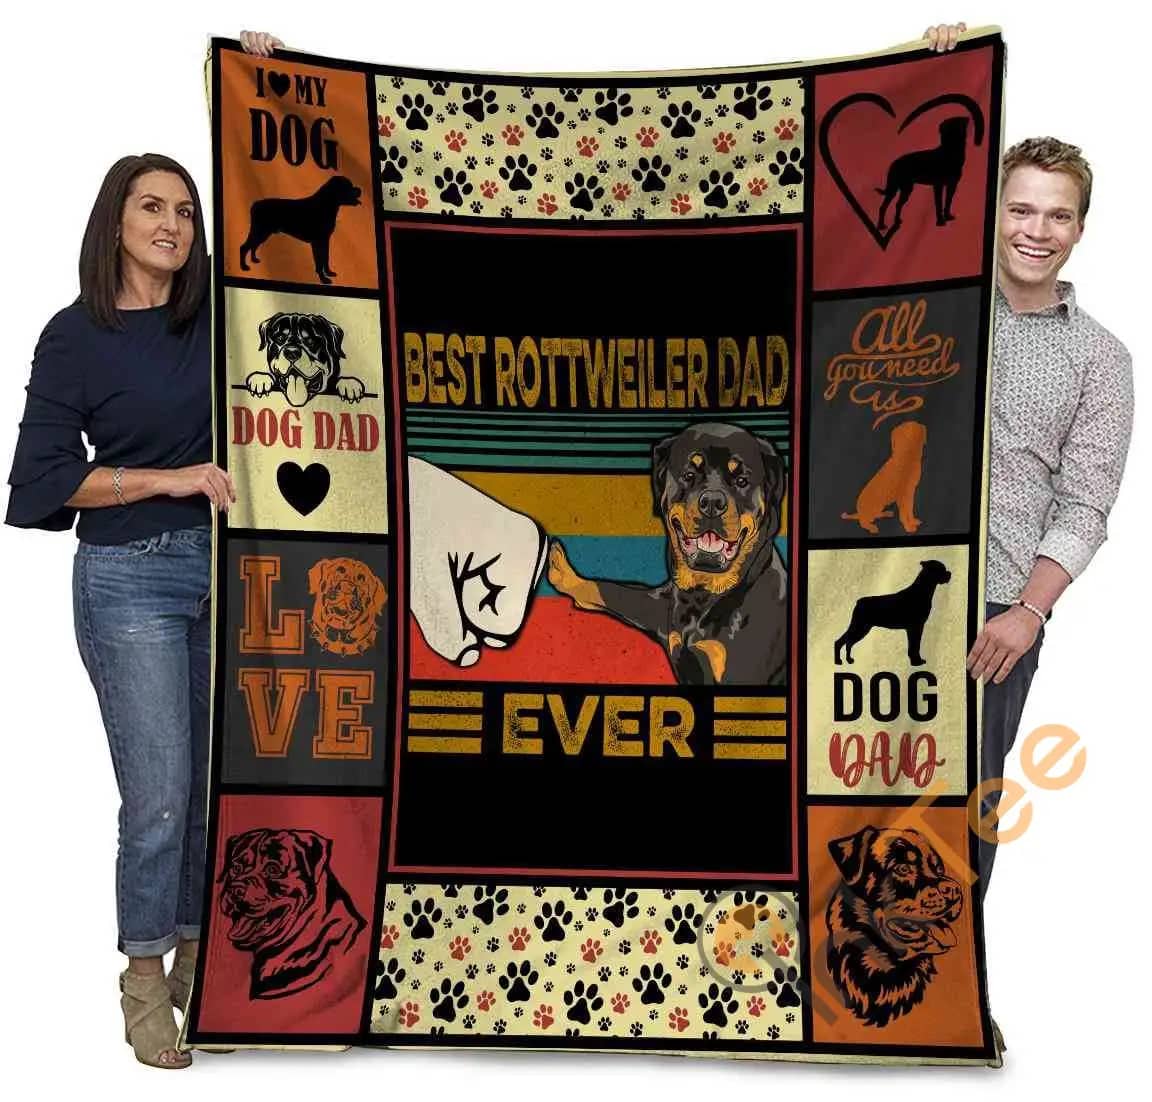 Best Rottweiler Dad Ever Rottweiler Dog Paw Bump Fit Ultra Soft Cozy Plush Fleece Blanket